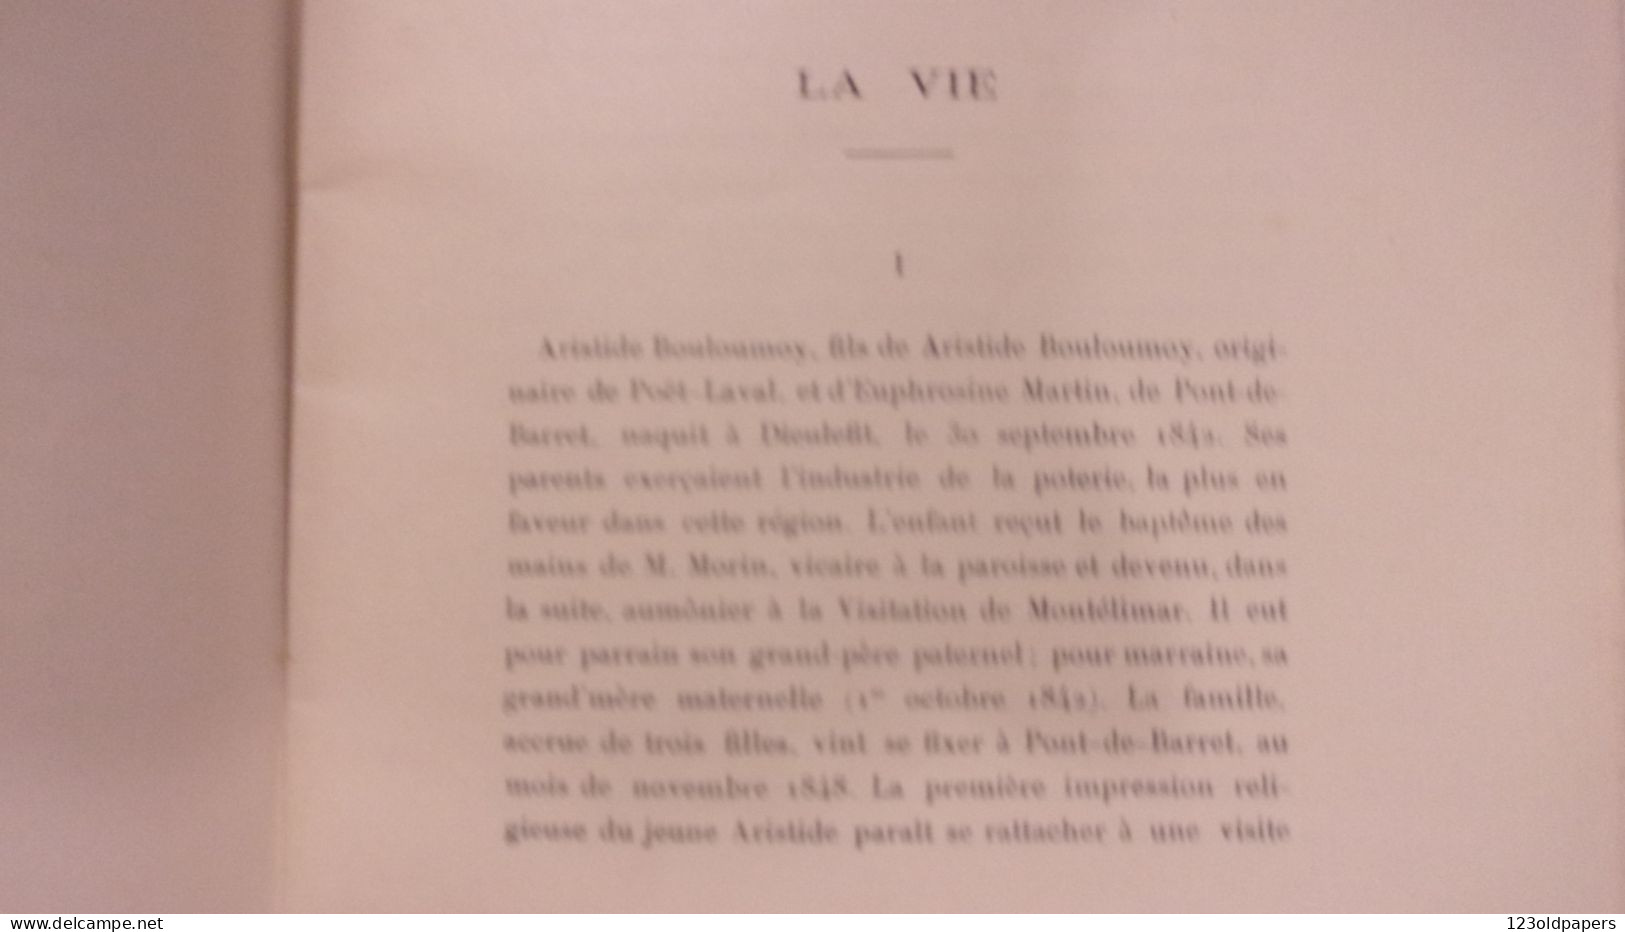 1911 DROME HECTOR REYNAUD CURE ST JEAN VALENCE ESQUISSE BIO CHANOINE BOULOUMOY ARCHIPRETRE CATHEDRALE  VALENCE - Rhône-Alpes